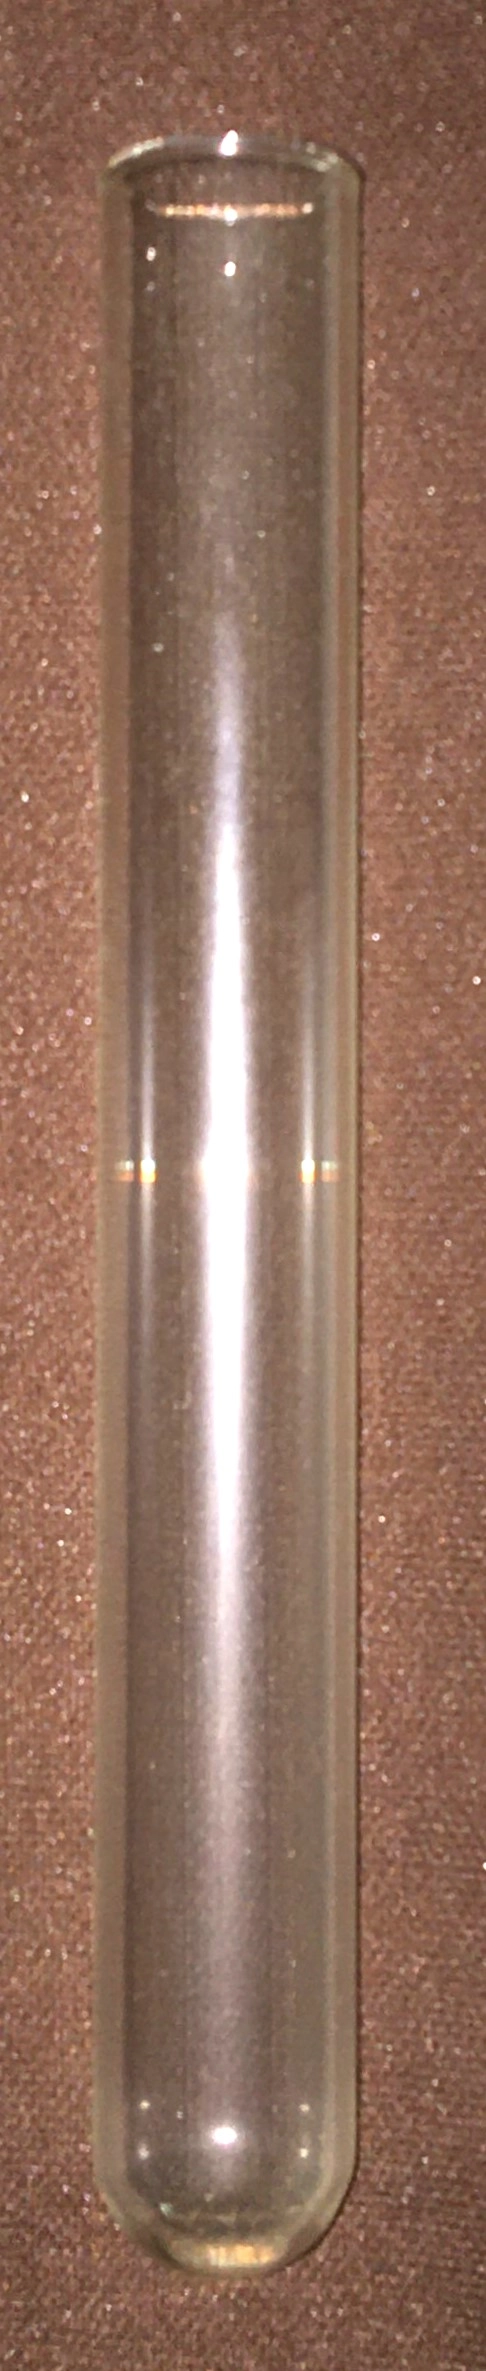 Kimble 45060 EXAX Culture Tubes - 22 x 175mm (Box of 56)